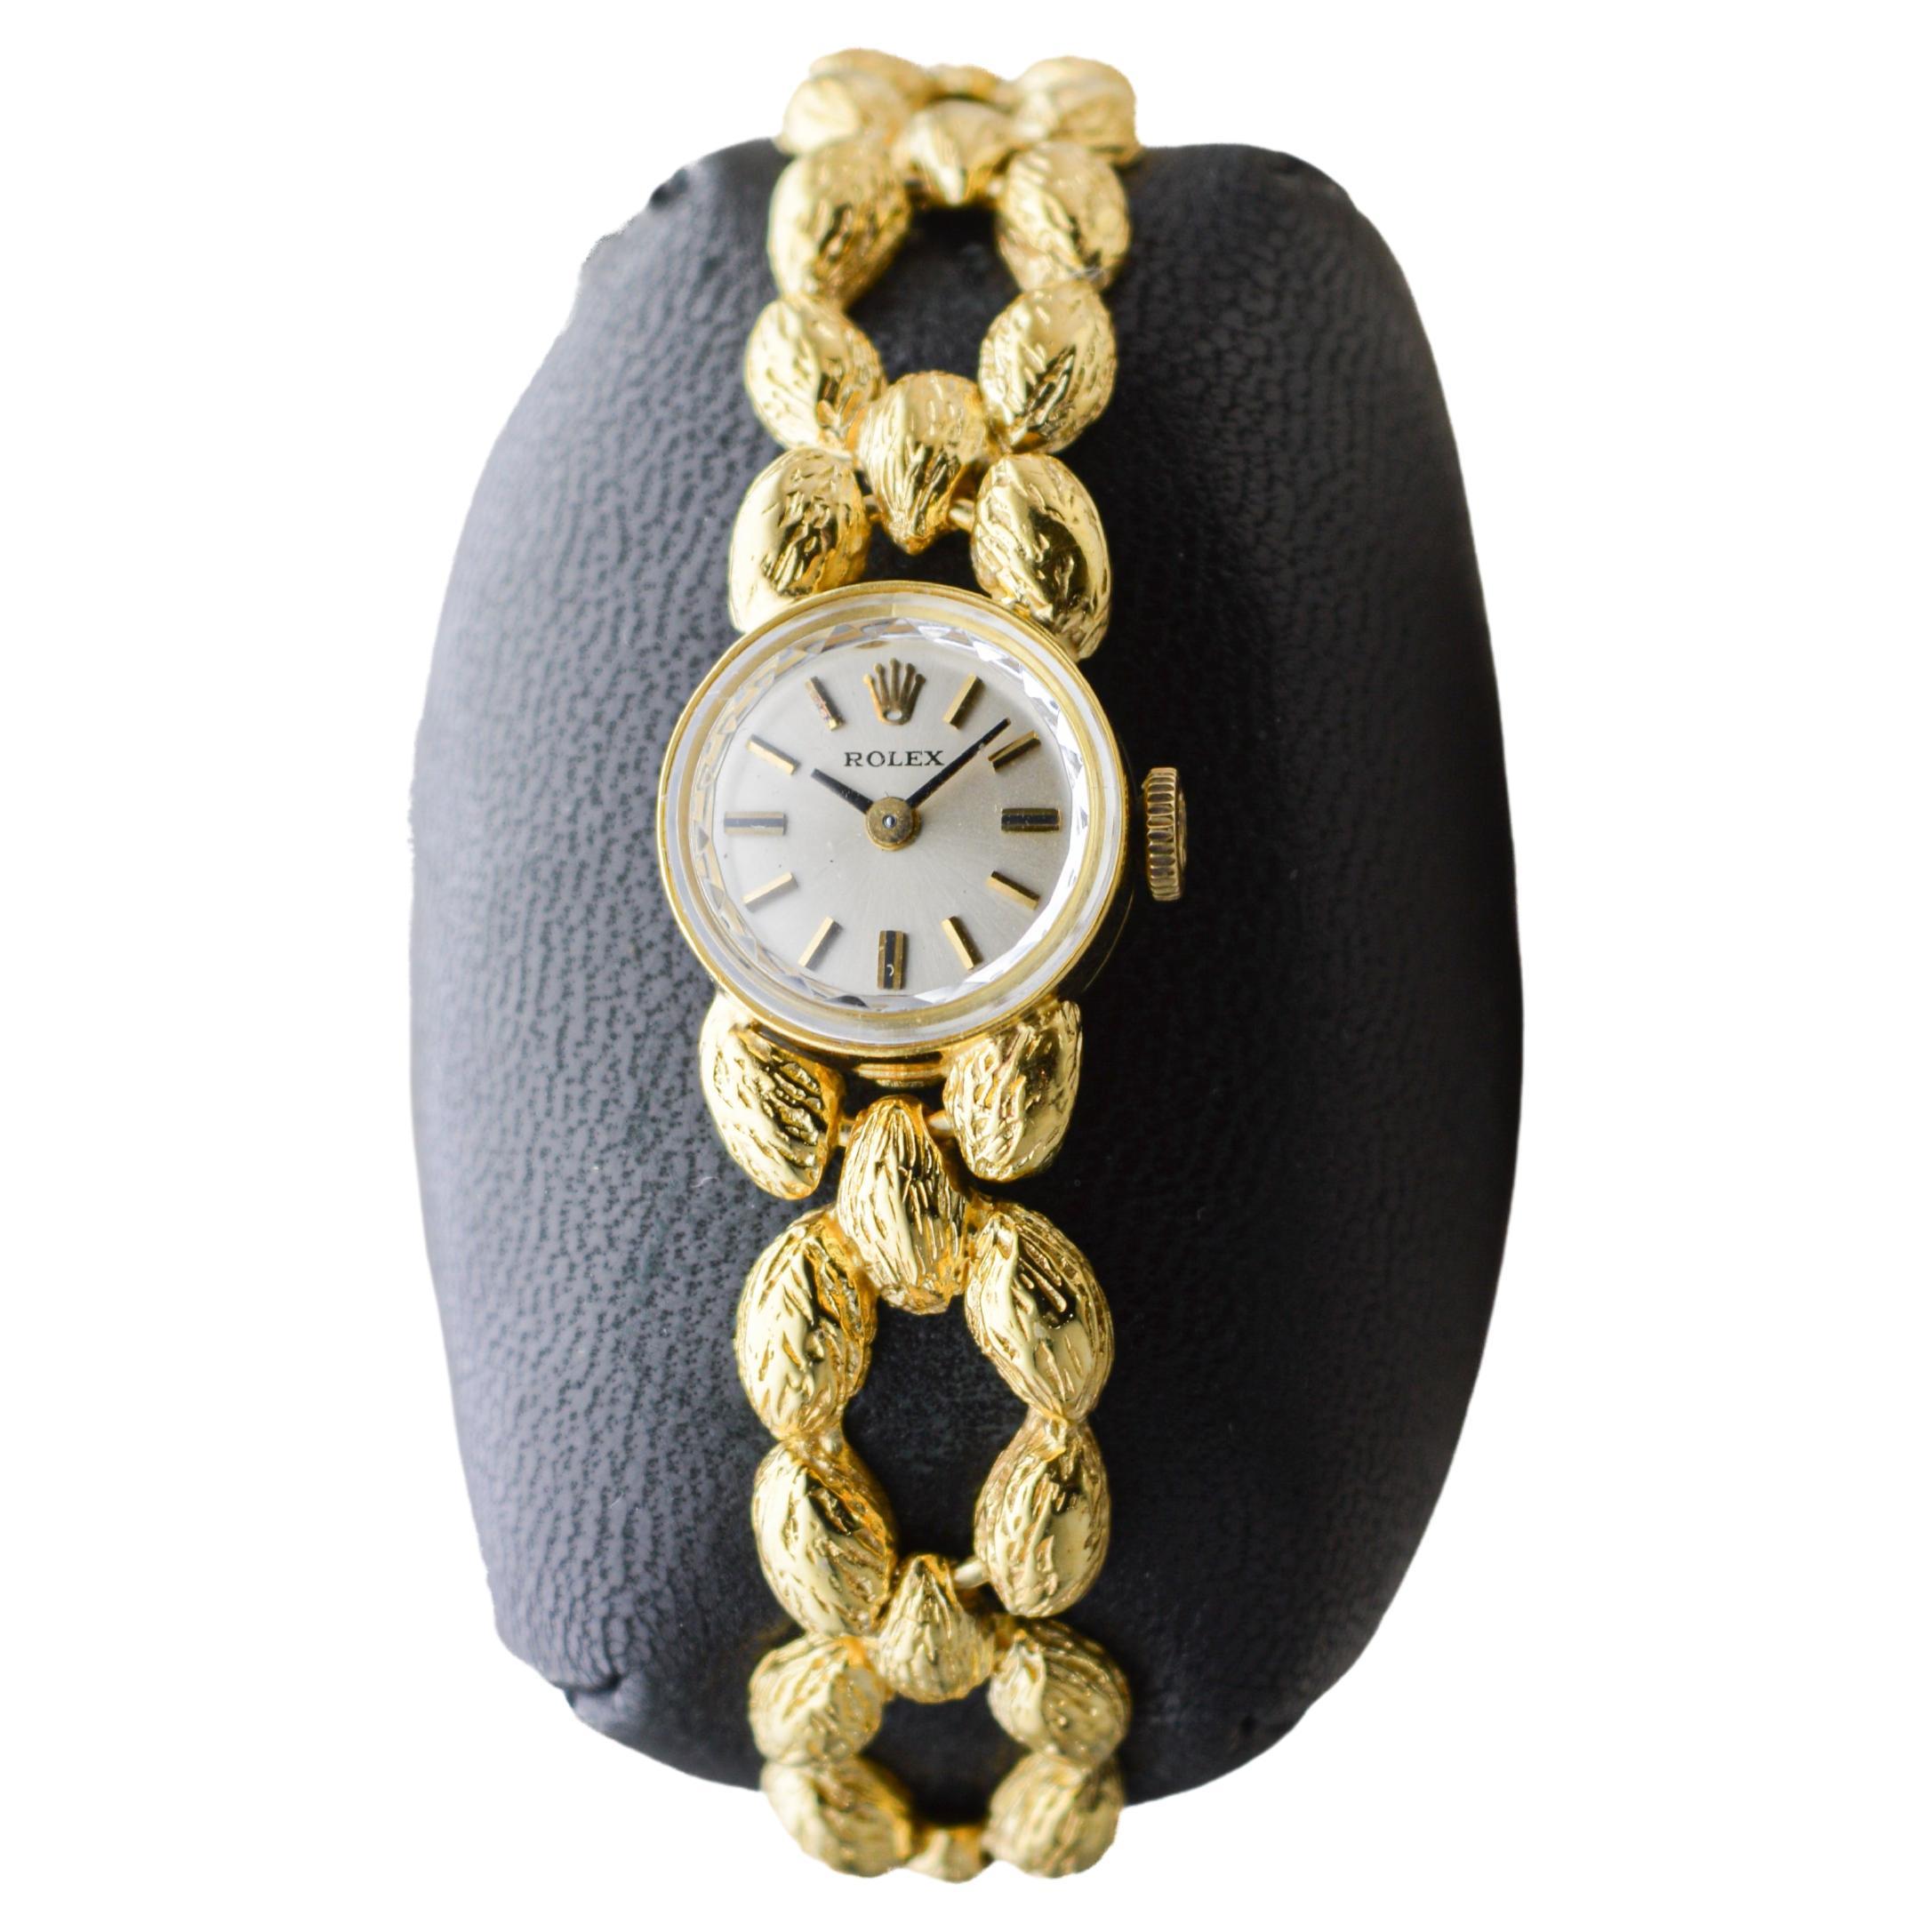 Art Deco Rolex 14Kt Solid Gold Bracelet Watch 